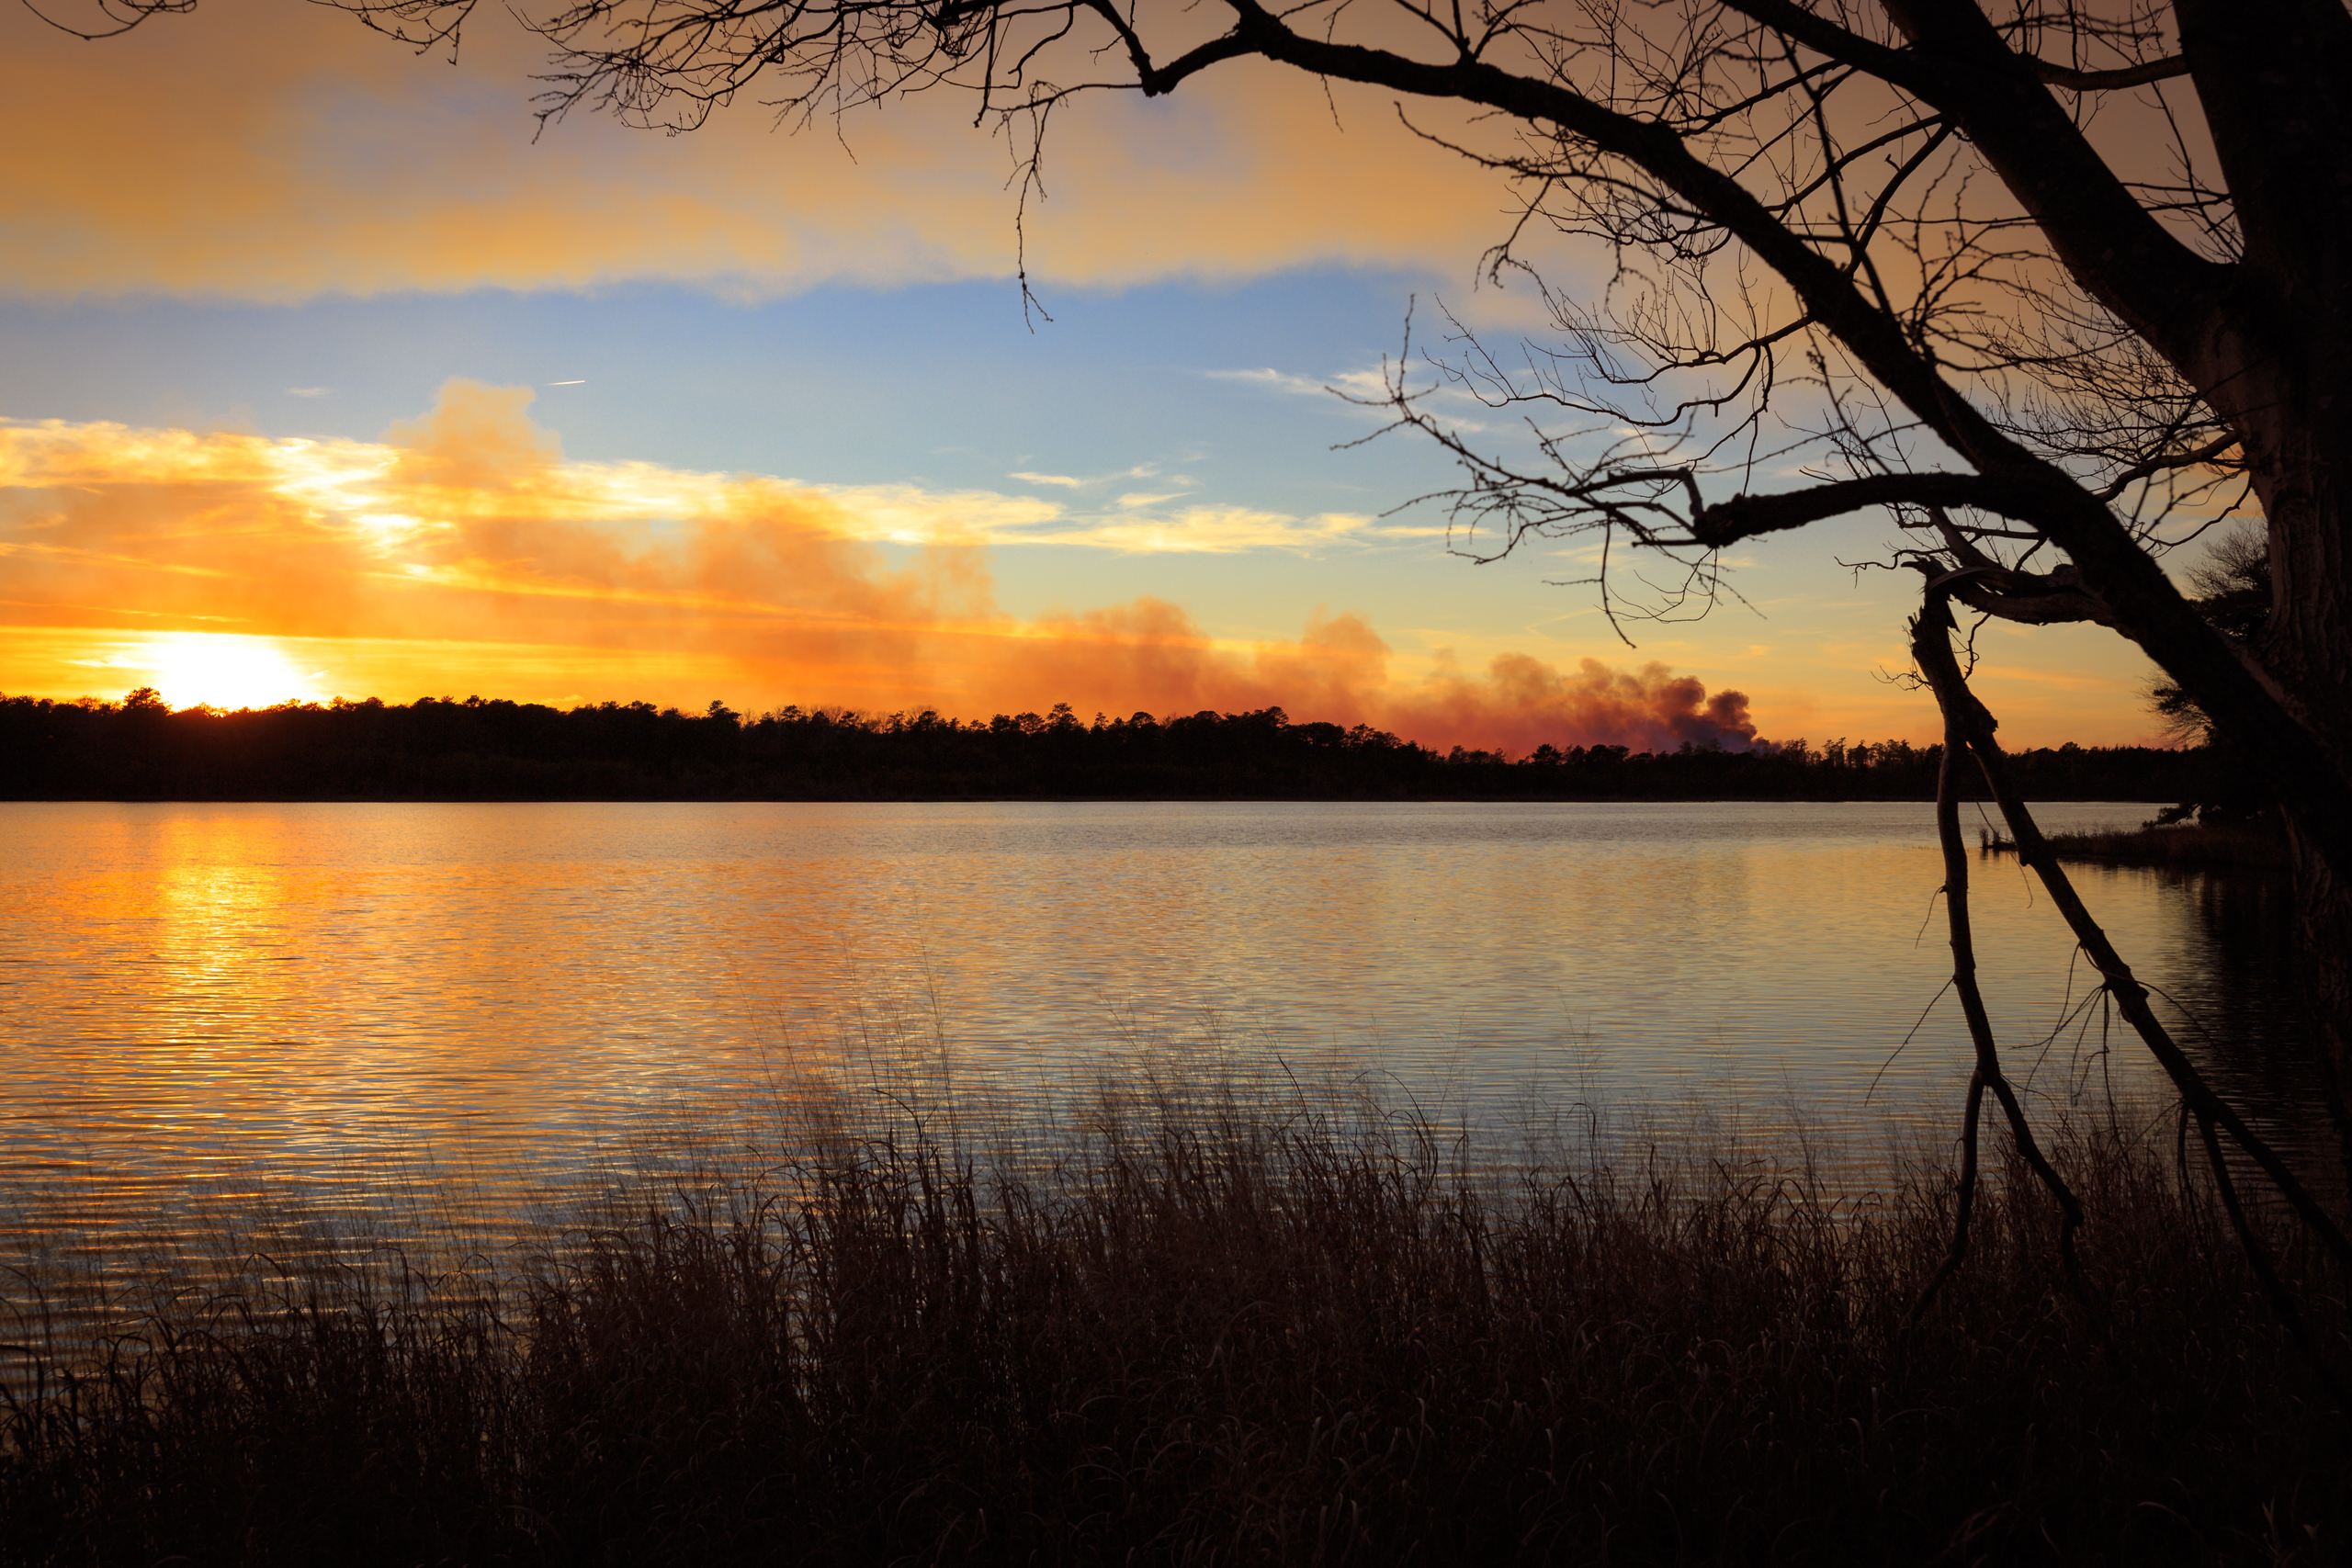 NJ Pinelands photo of a controlled burn smoke plume training across the horizon at sunset.